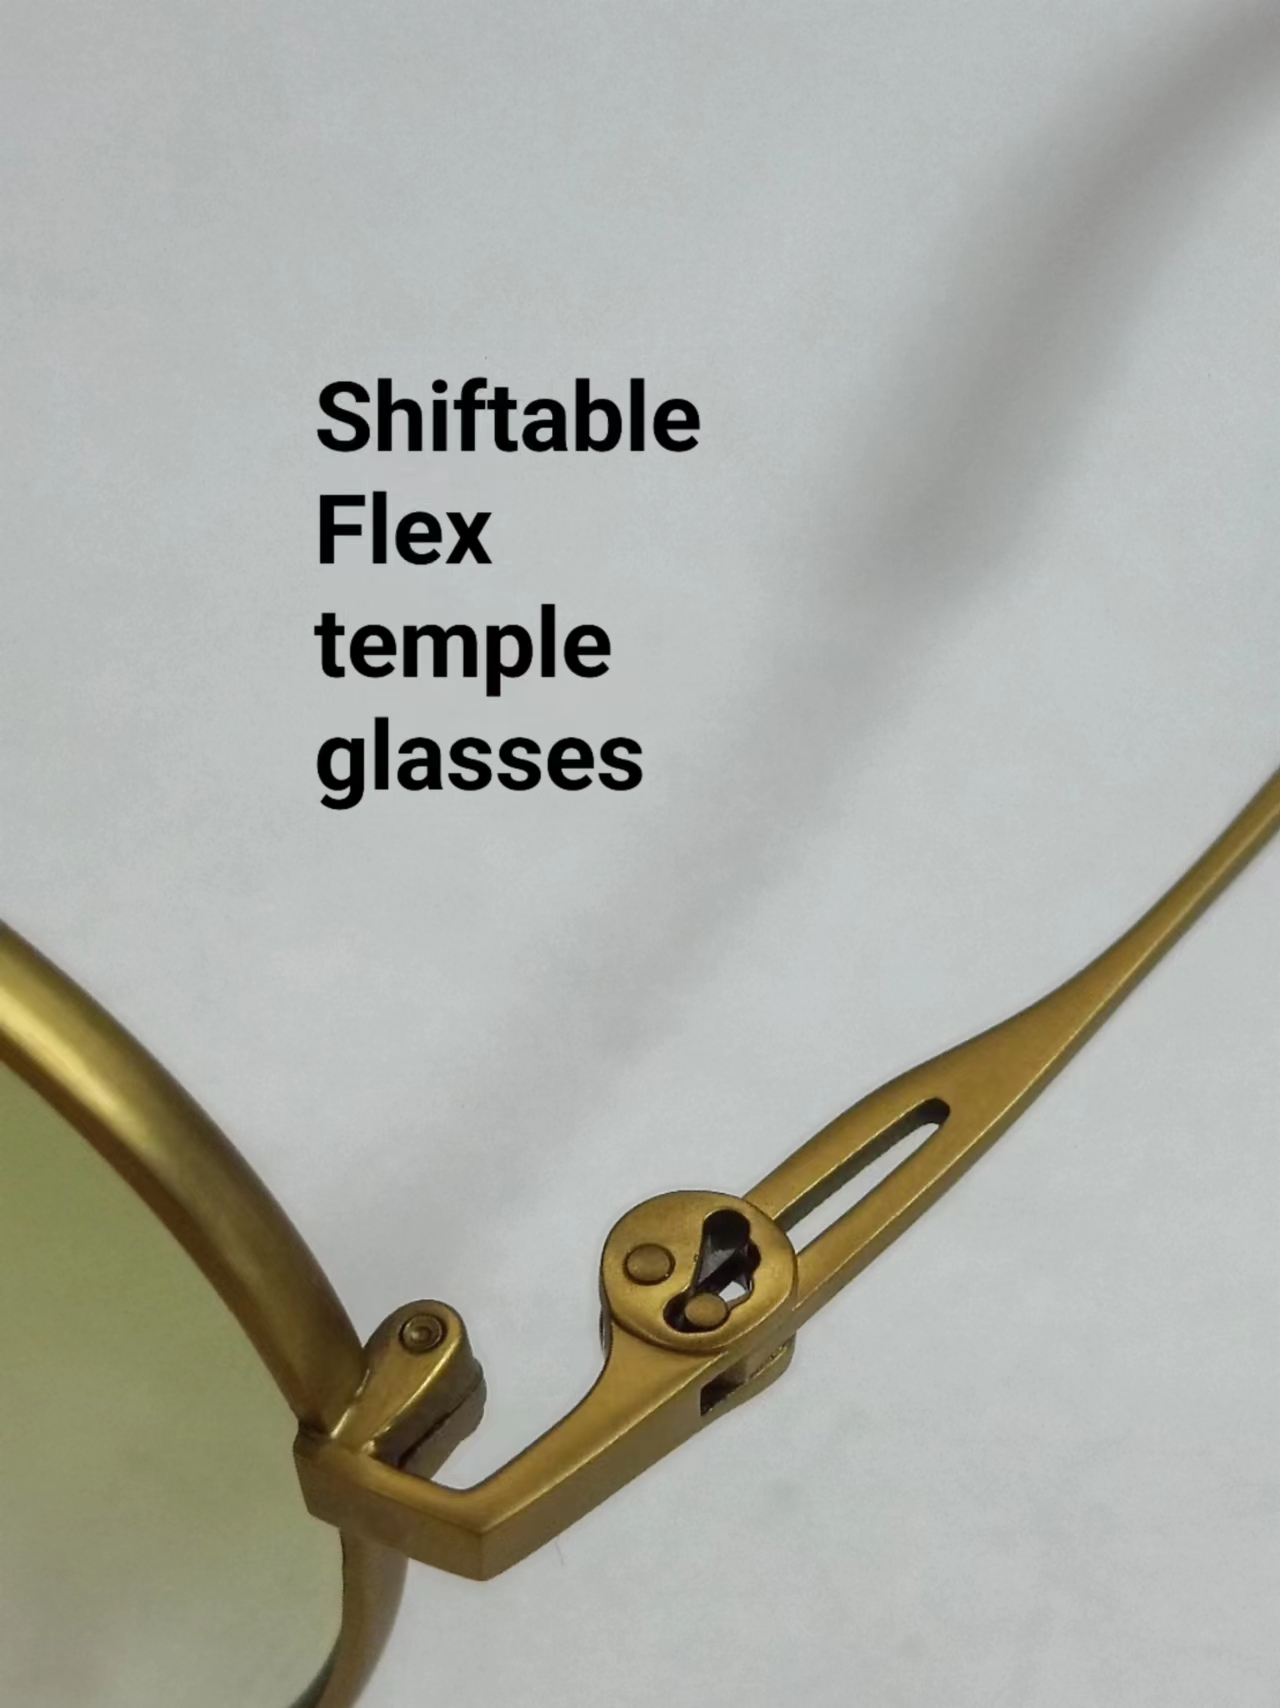 SHIFTABLE FLEX TEMPLE GLASSES